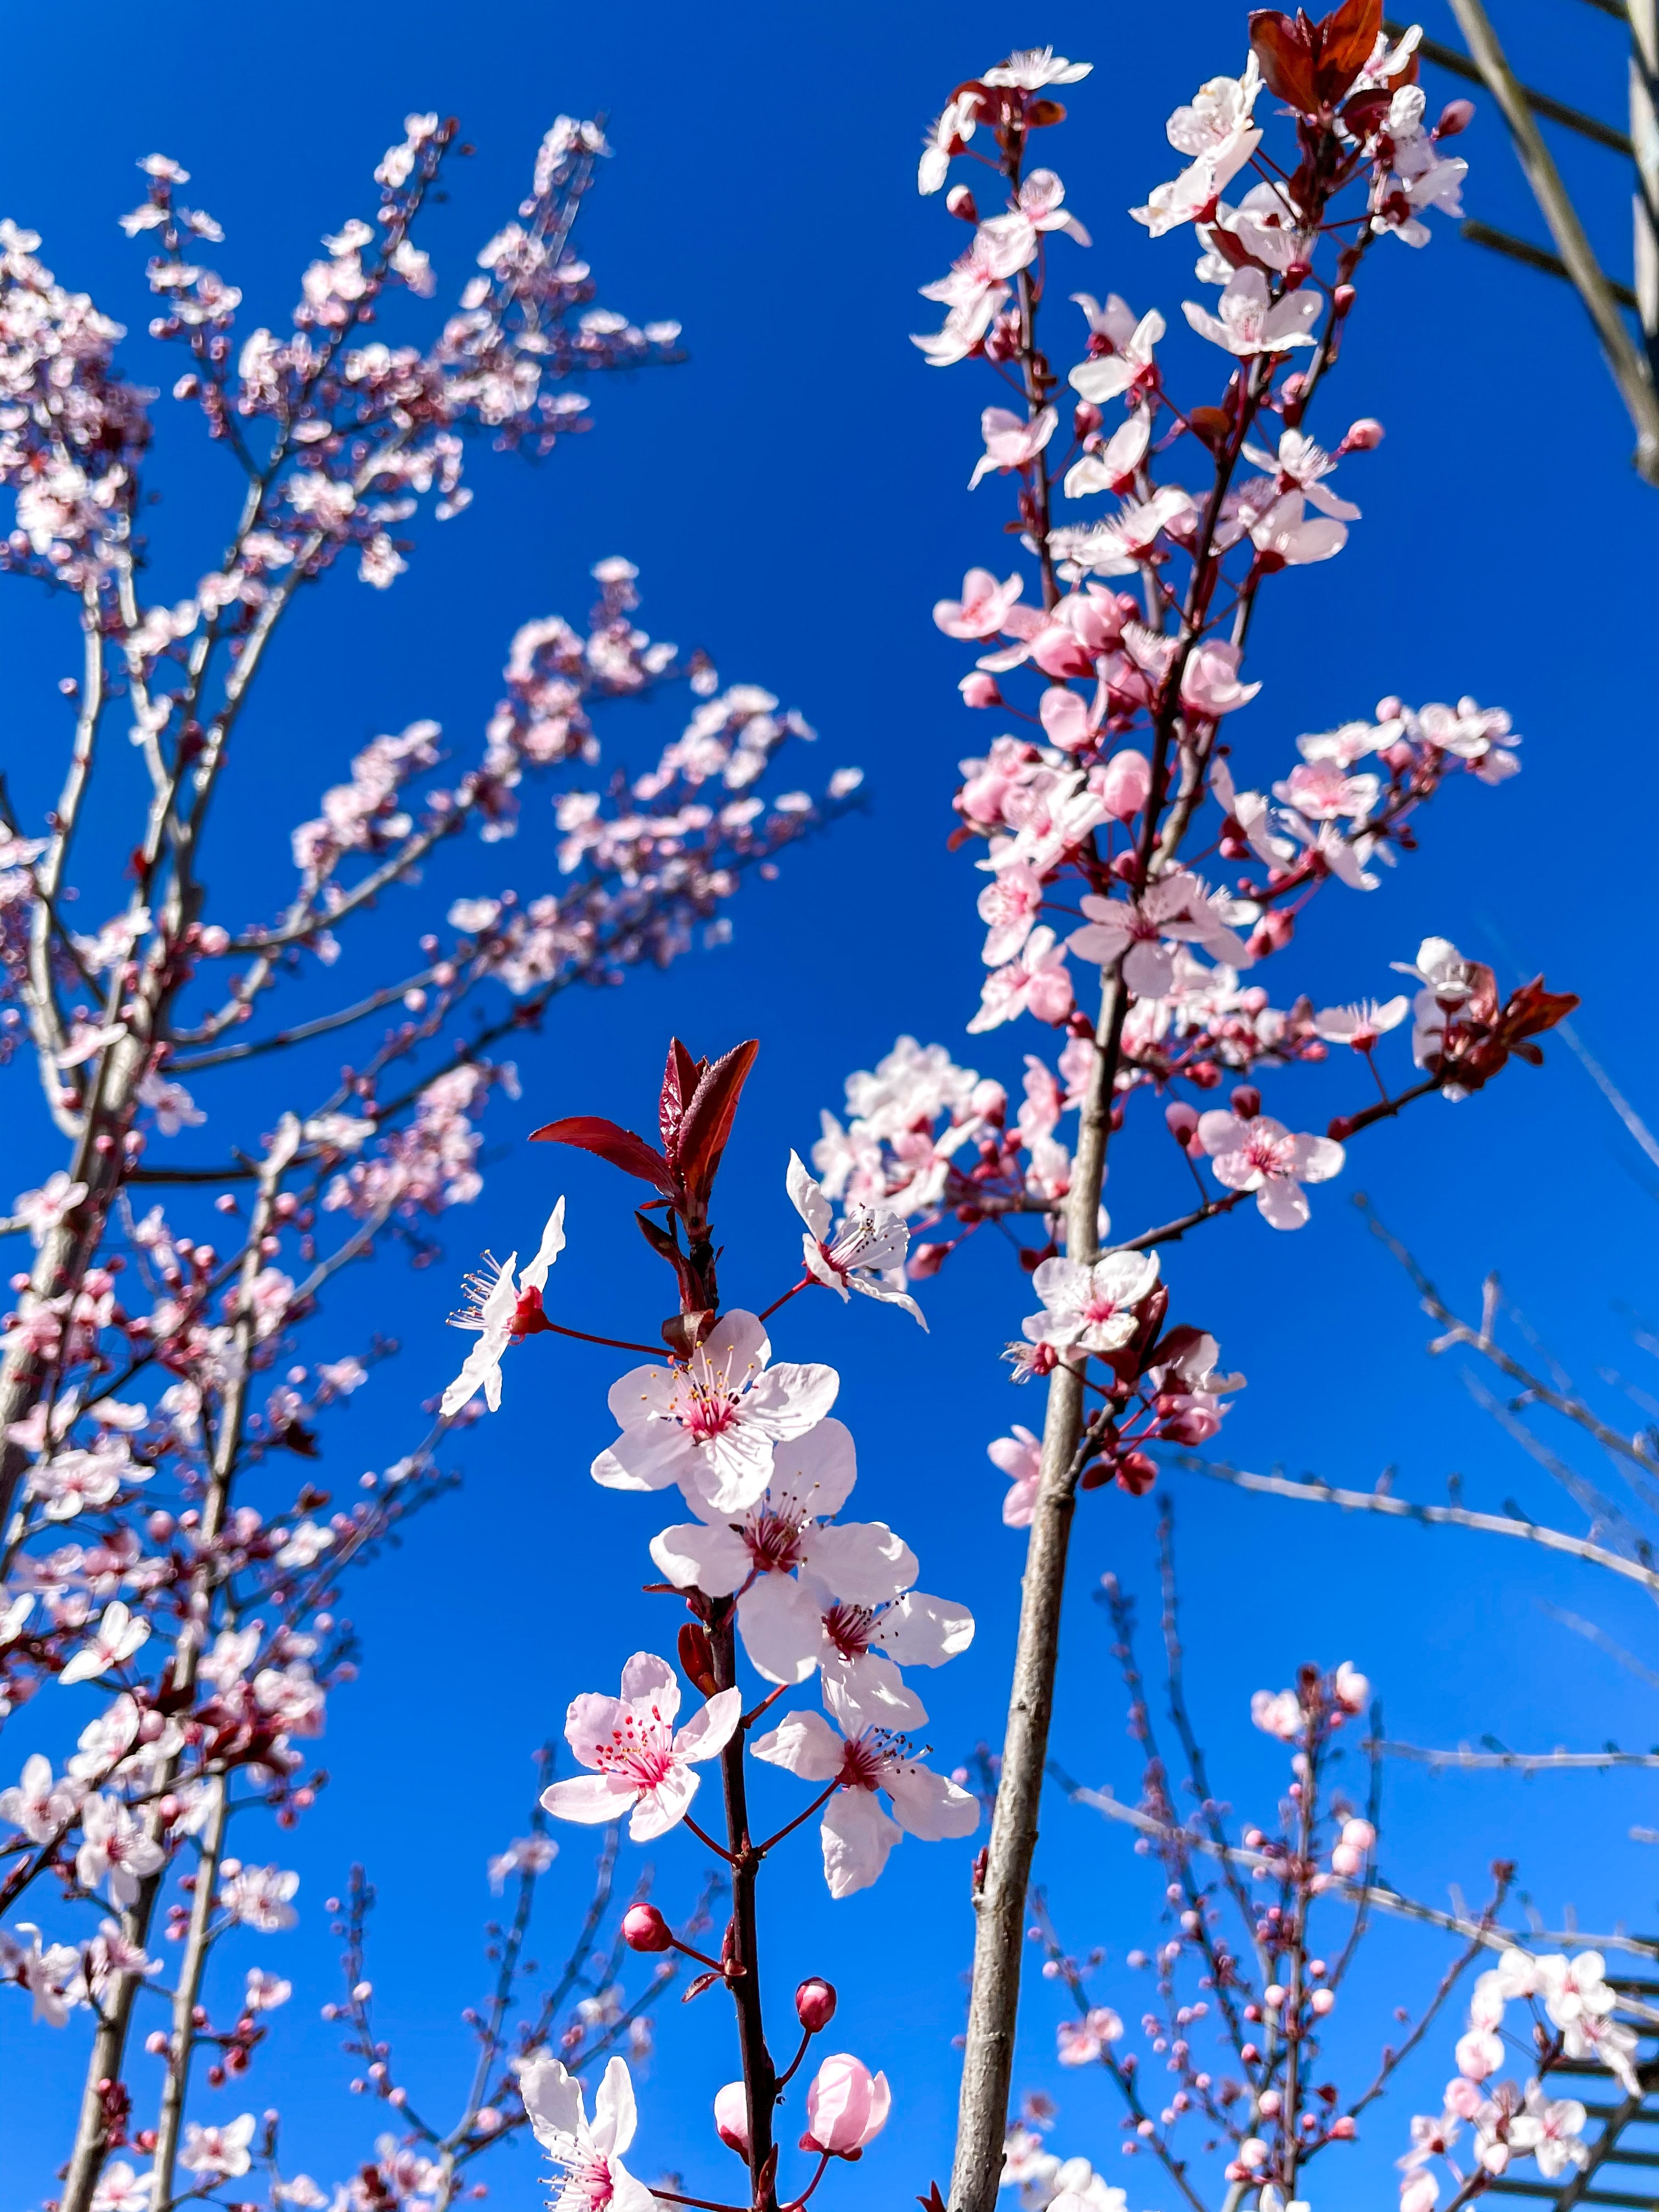 Popular Cherry Blossom Image for Phone